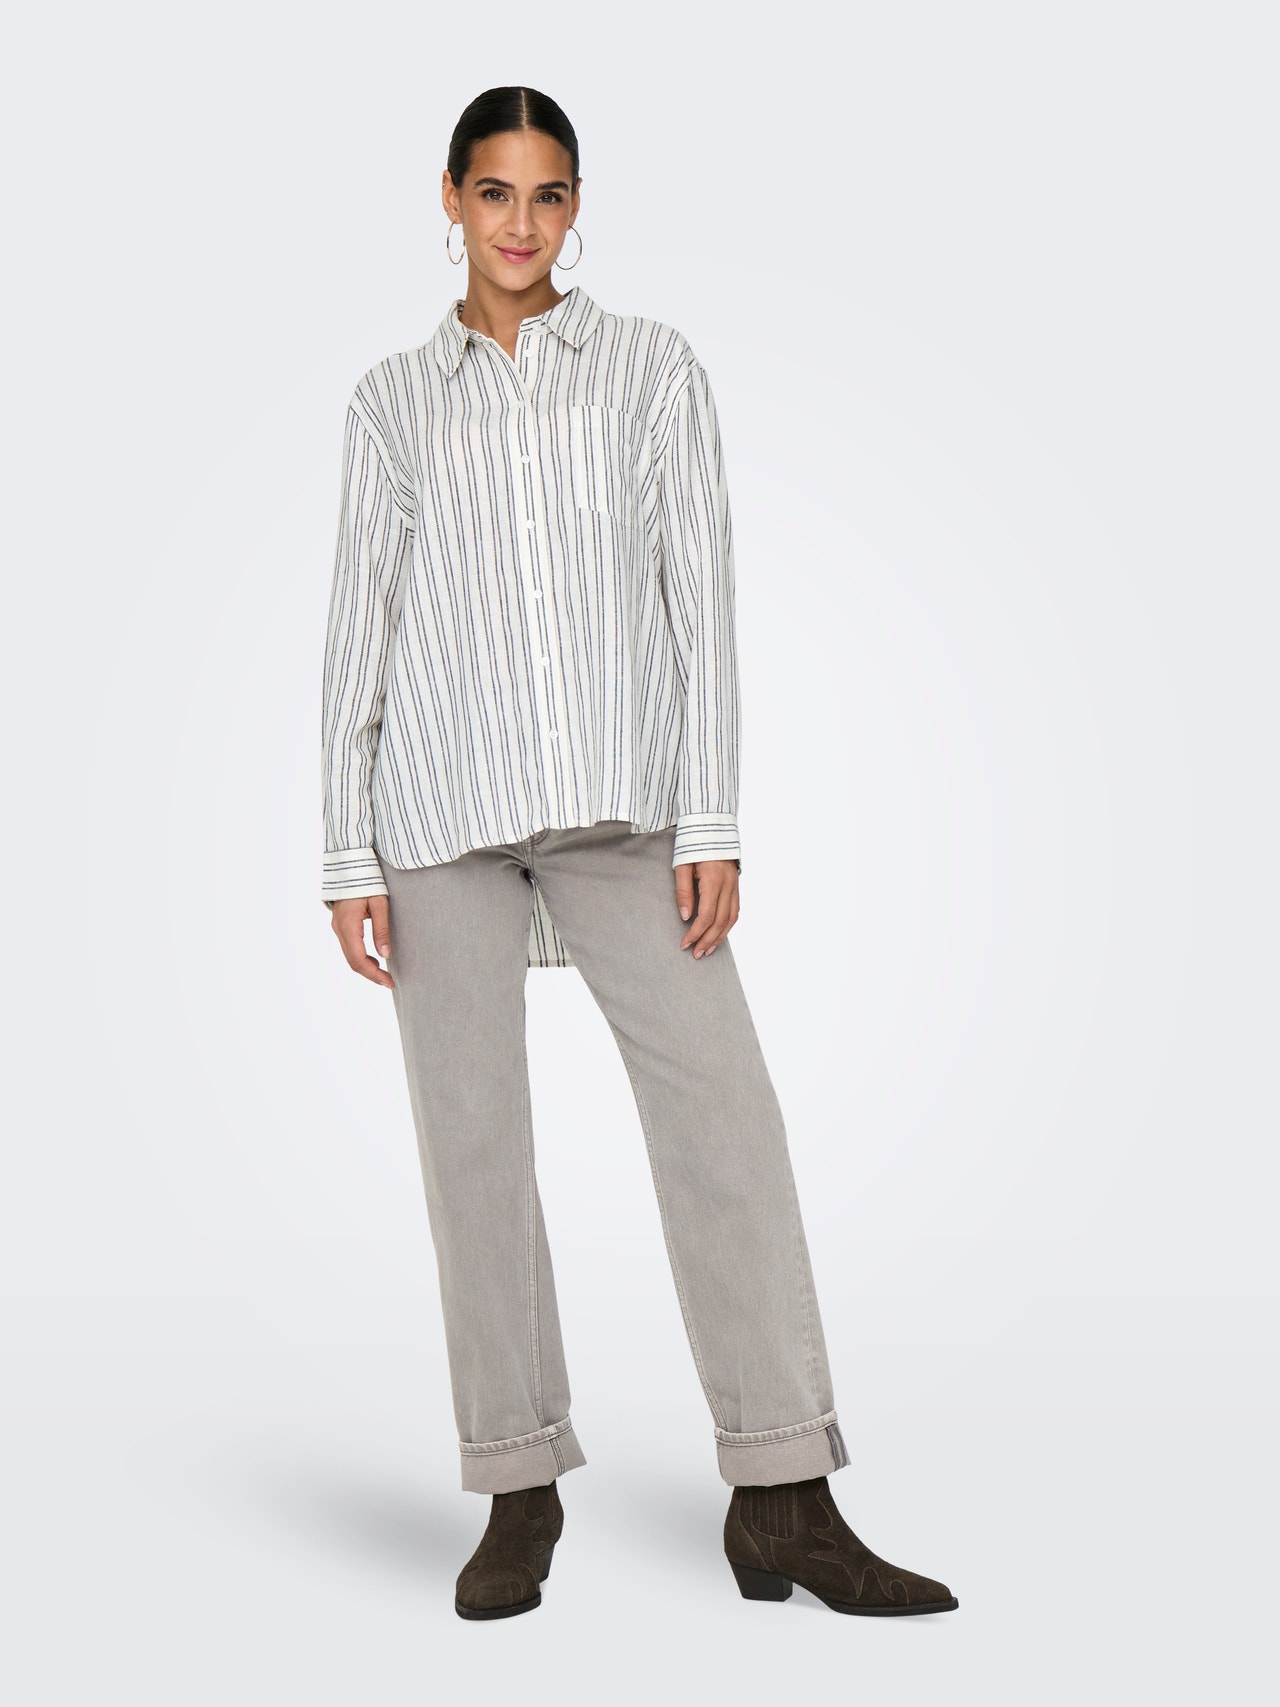 ONLY Regular Fit Shirt collar Shirt -Bright White - 15313718